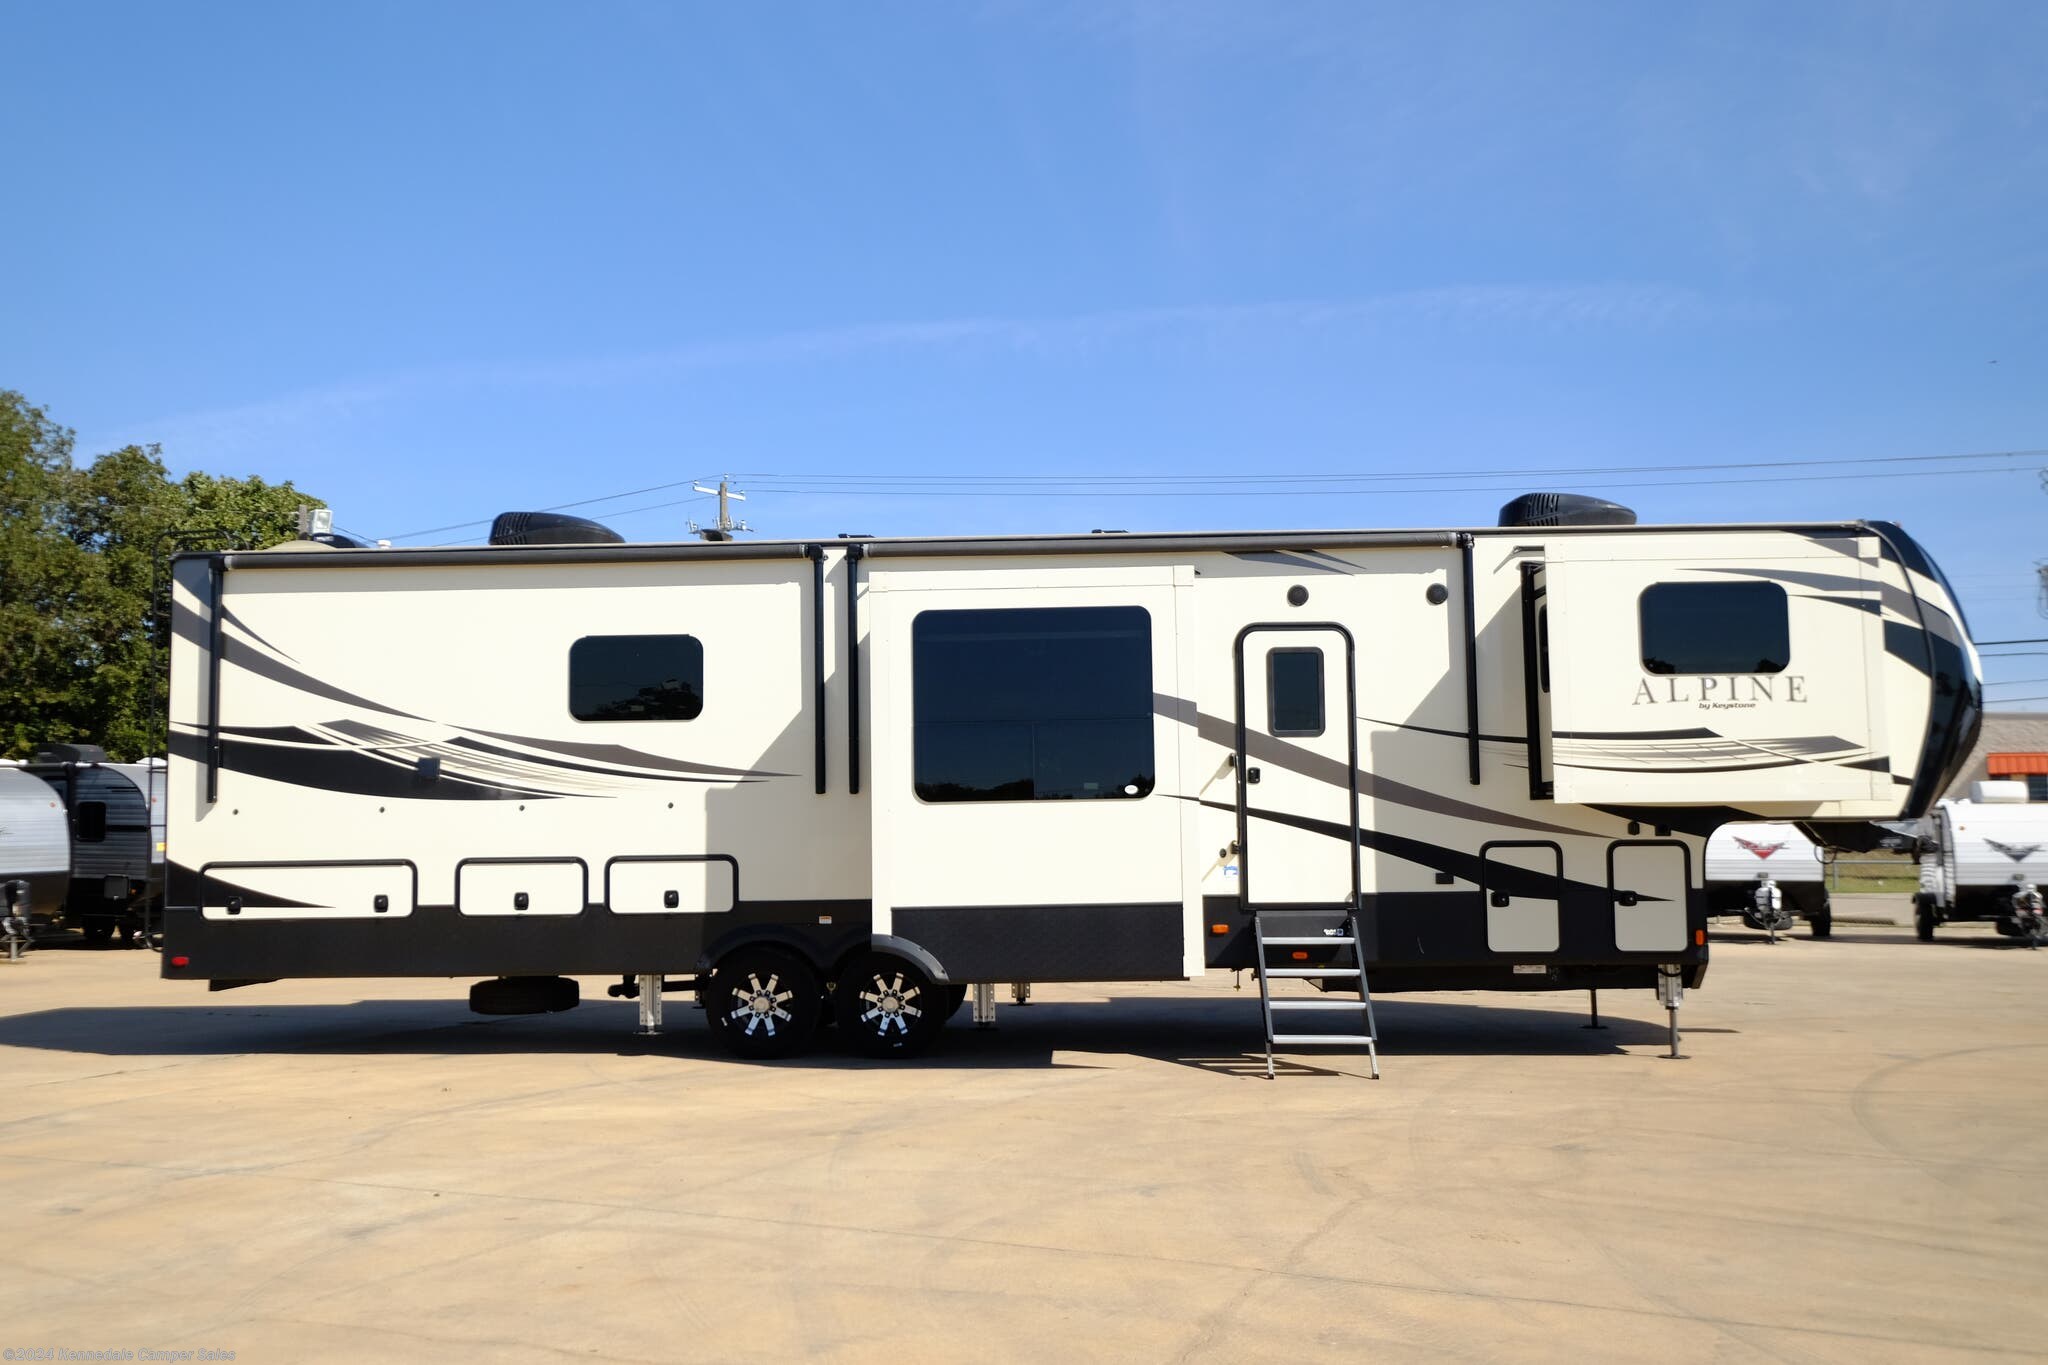 2019 Keystone Alpine 3701FL RV for Sale in Kennedale, TX 76060 | 781094 Keystone Alpine 3701fl Fifth Wheel Camper With A Front Kitchen